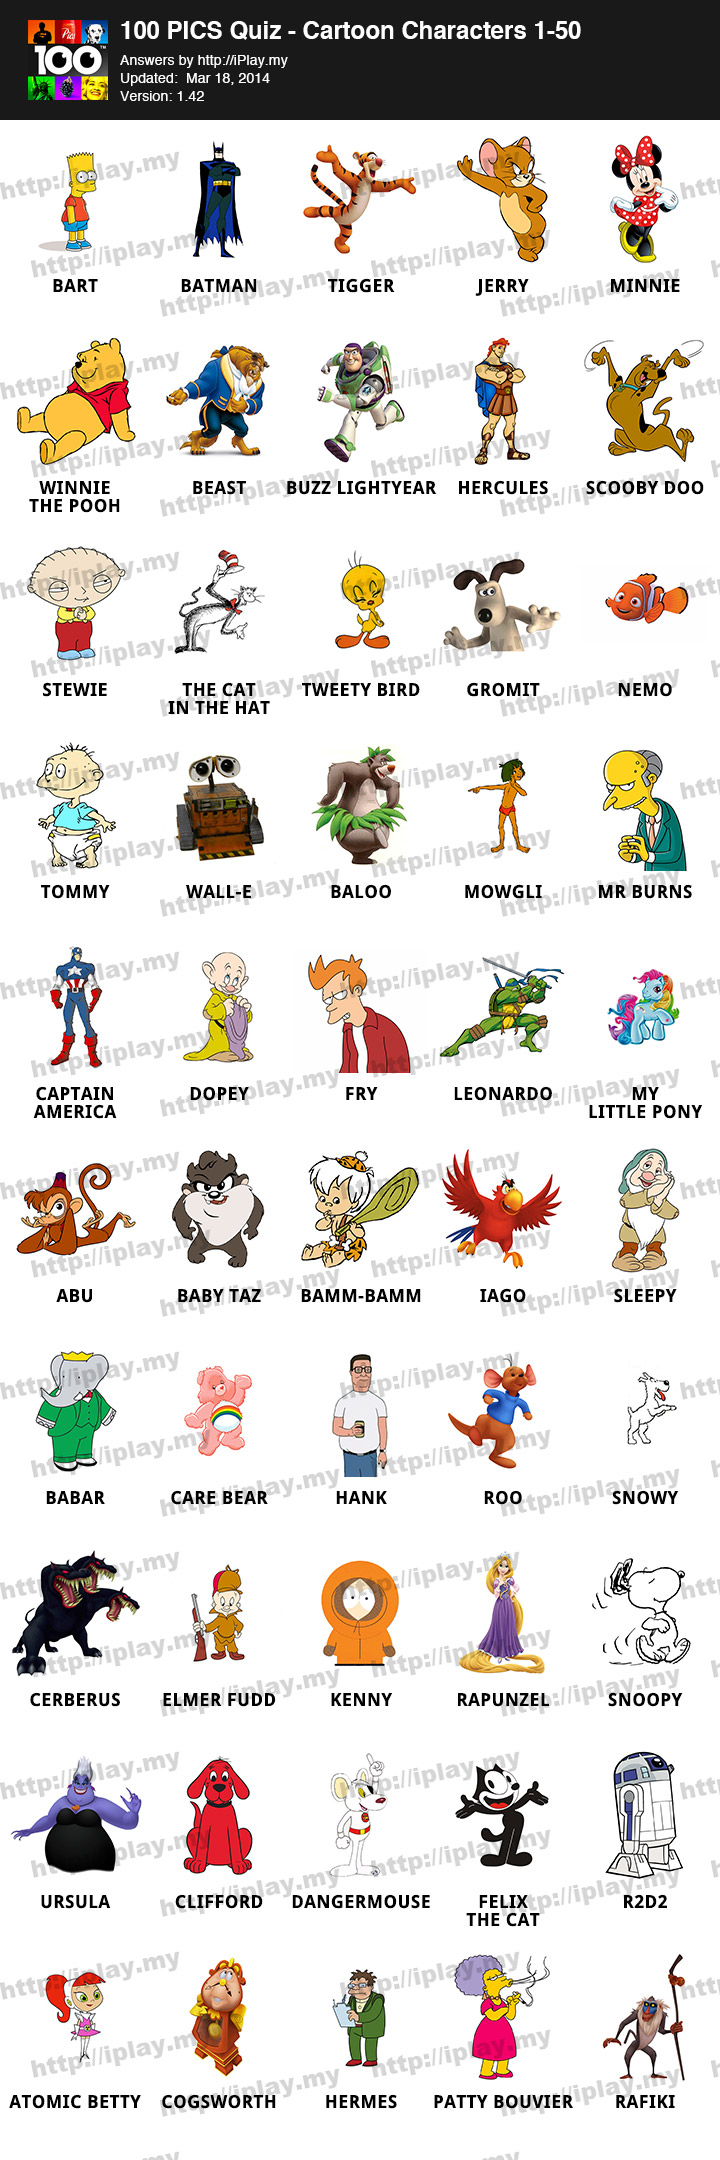 100-Pics-Quiz-Cartoon-Characters-Answers-1-50